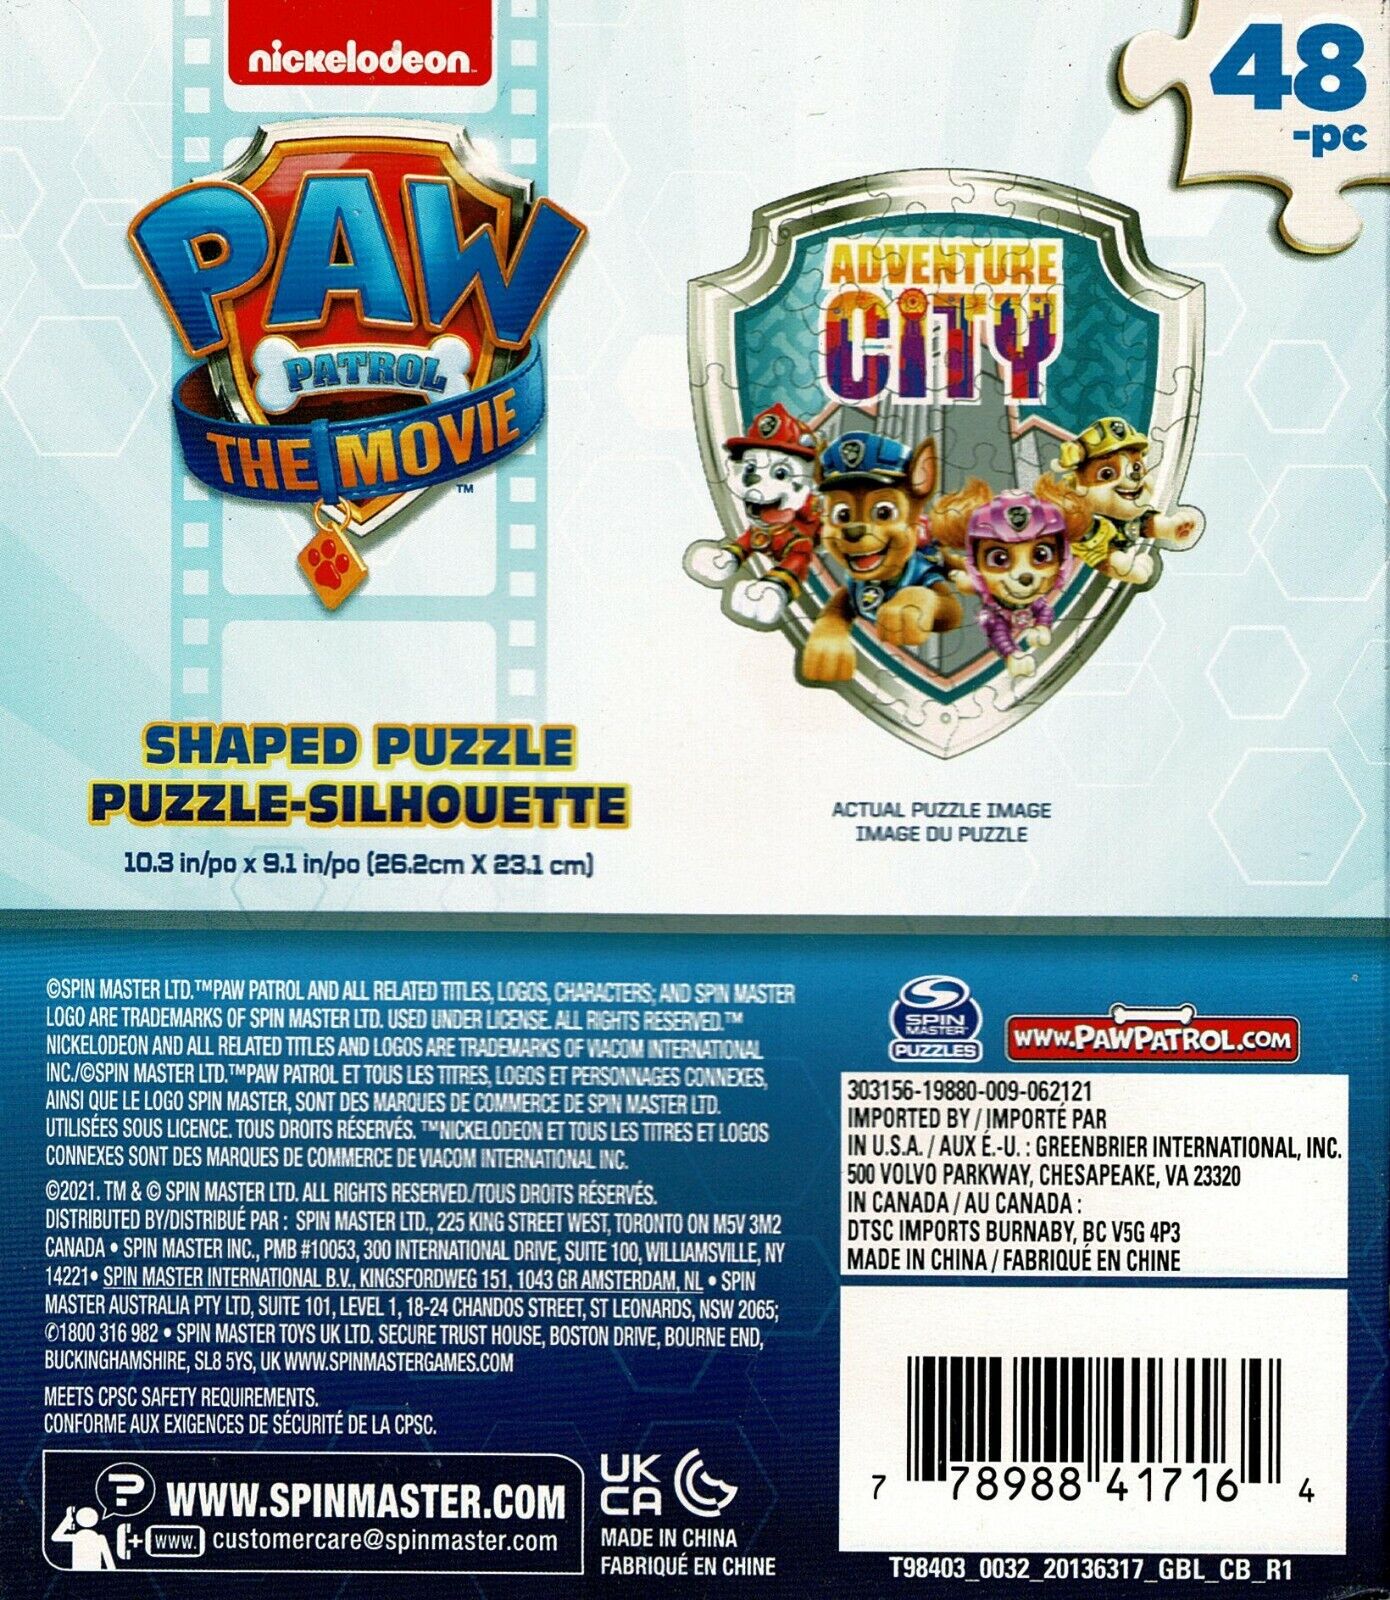 Nickelodeon Paw Patrol Adventure City - 48 Shaped Puzzle